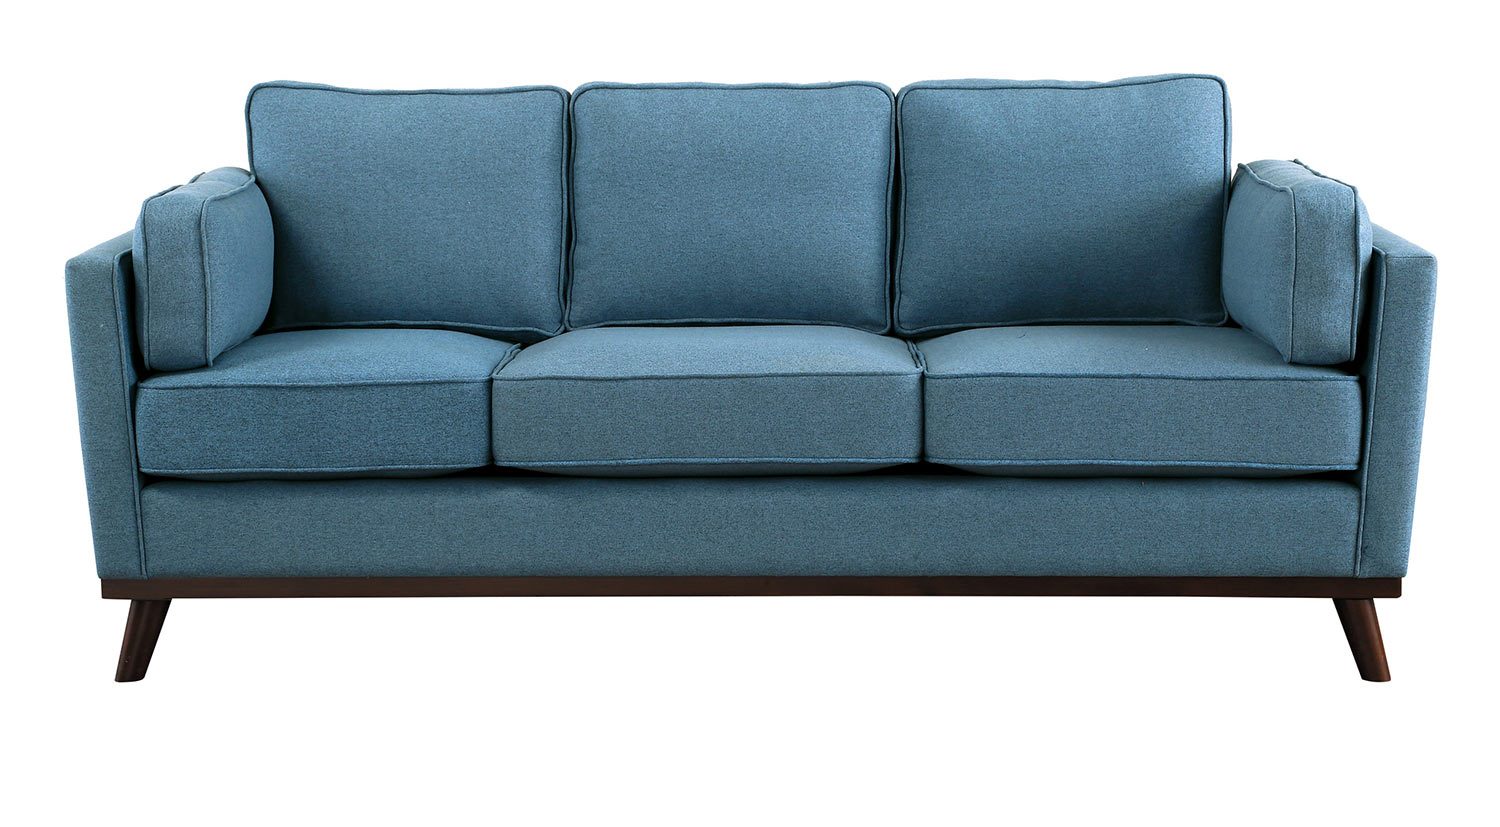 Homelegance Bedos Sofa - Blue